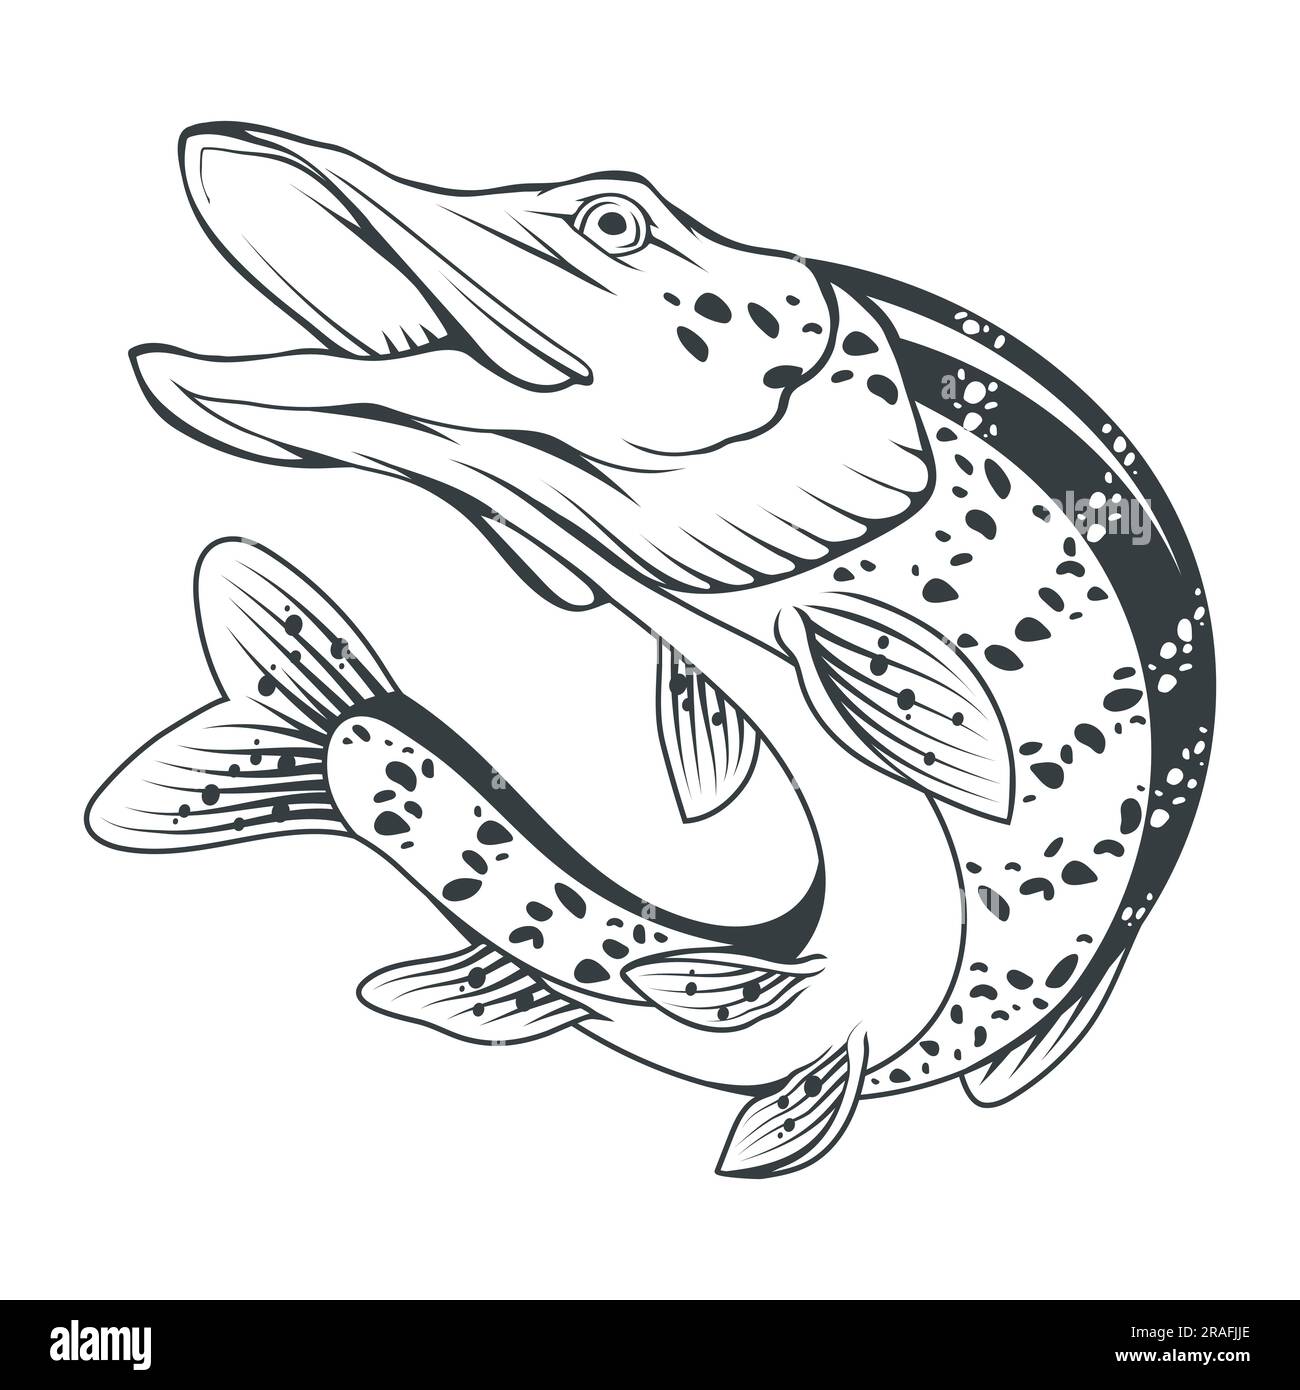 Pike. Vector illustration of a sketch jumping fish. Fishing logo